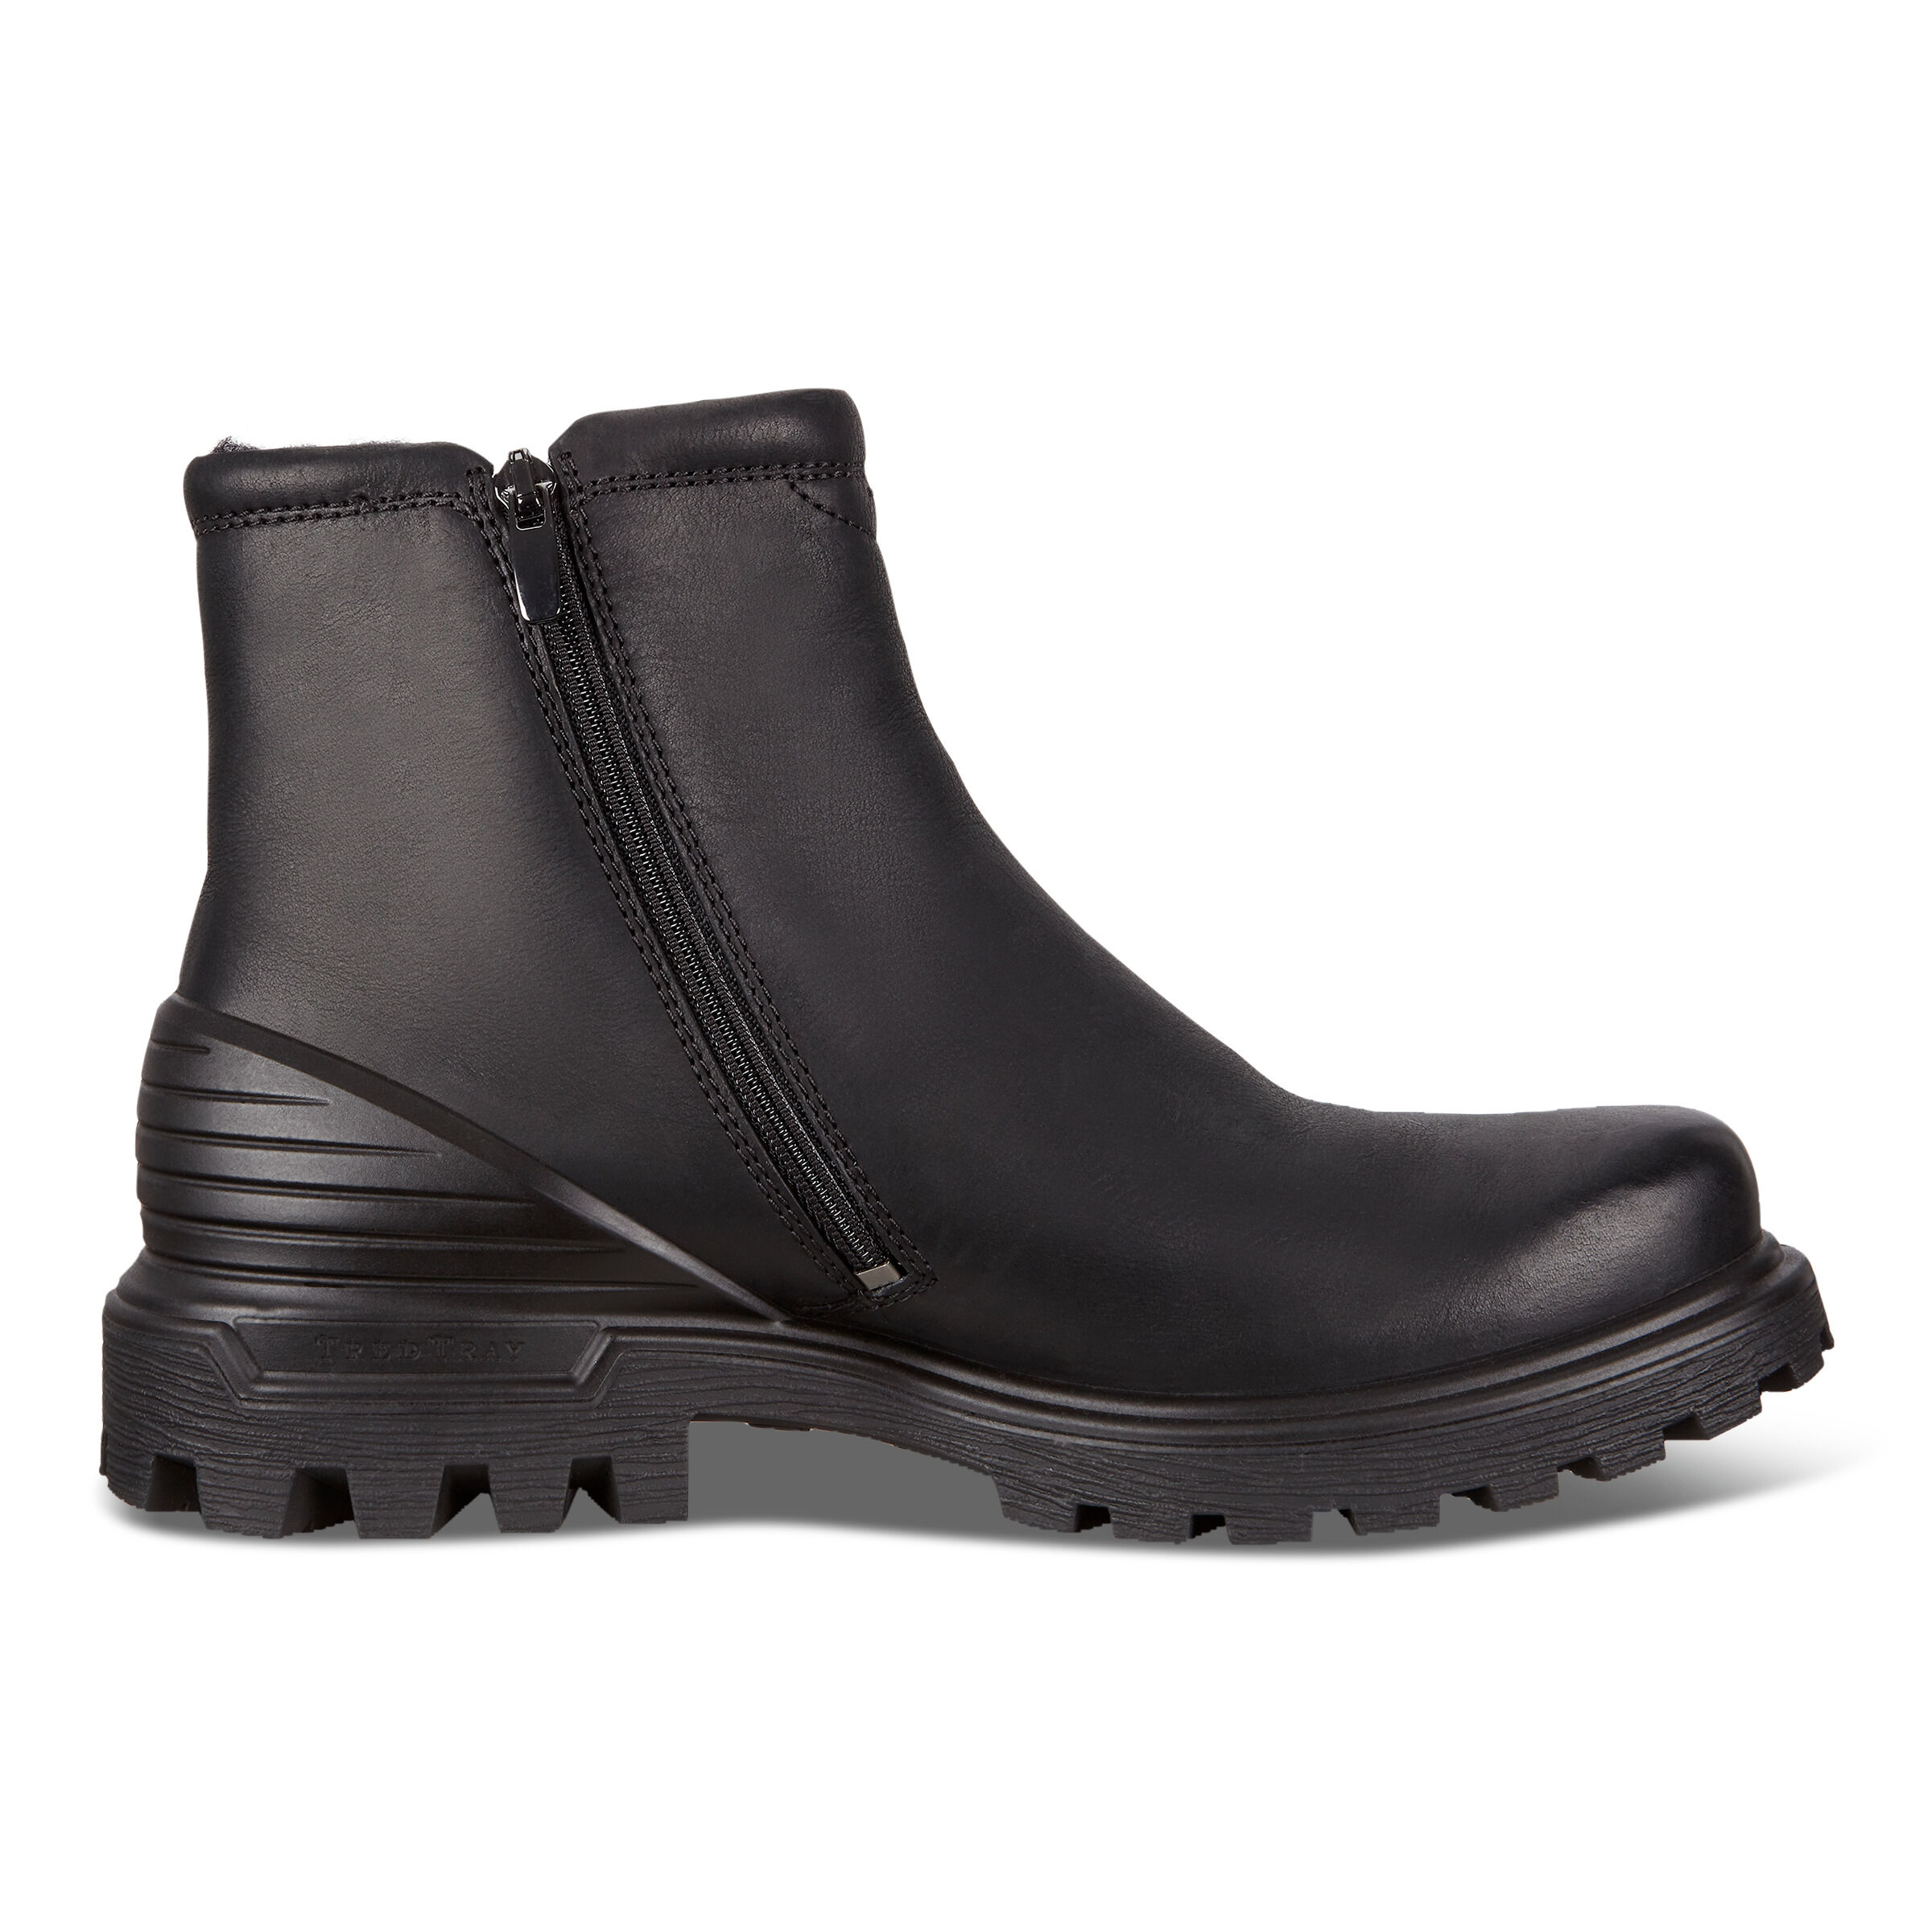 Tredtray Boots | Men's Boots | ECCO® Shoes